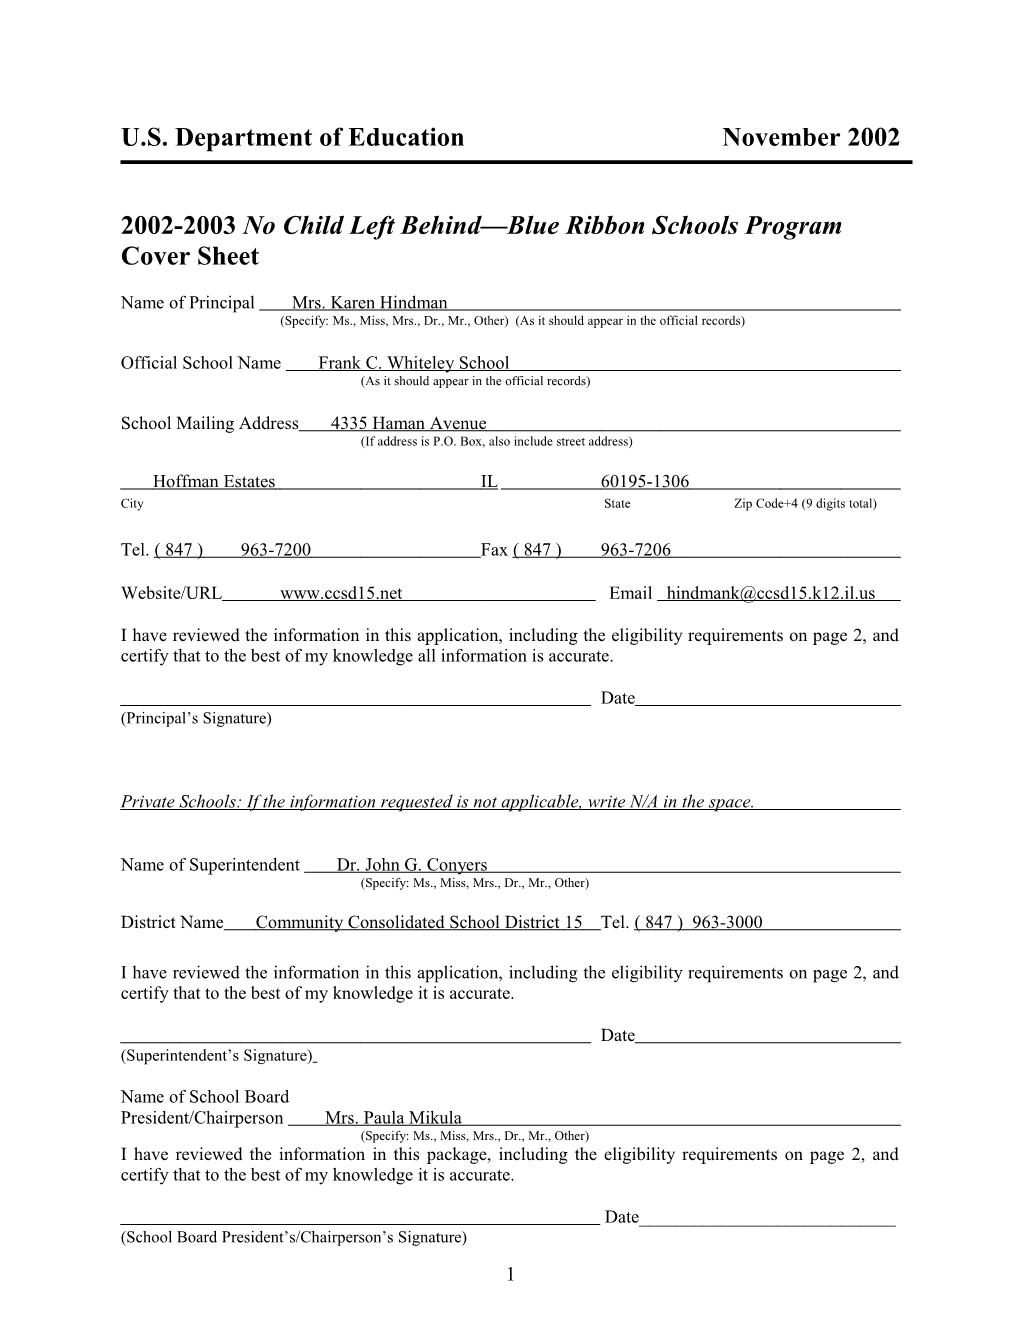 Frank C. Whiteley School 2003 No Child Left Behind-Blue Ribbon School (Msword)